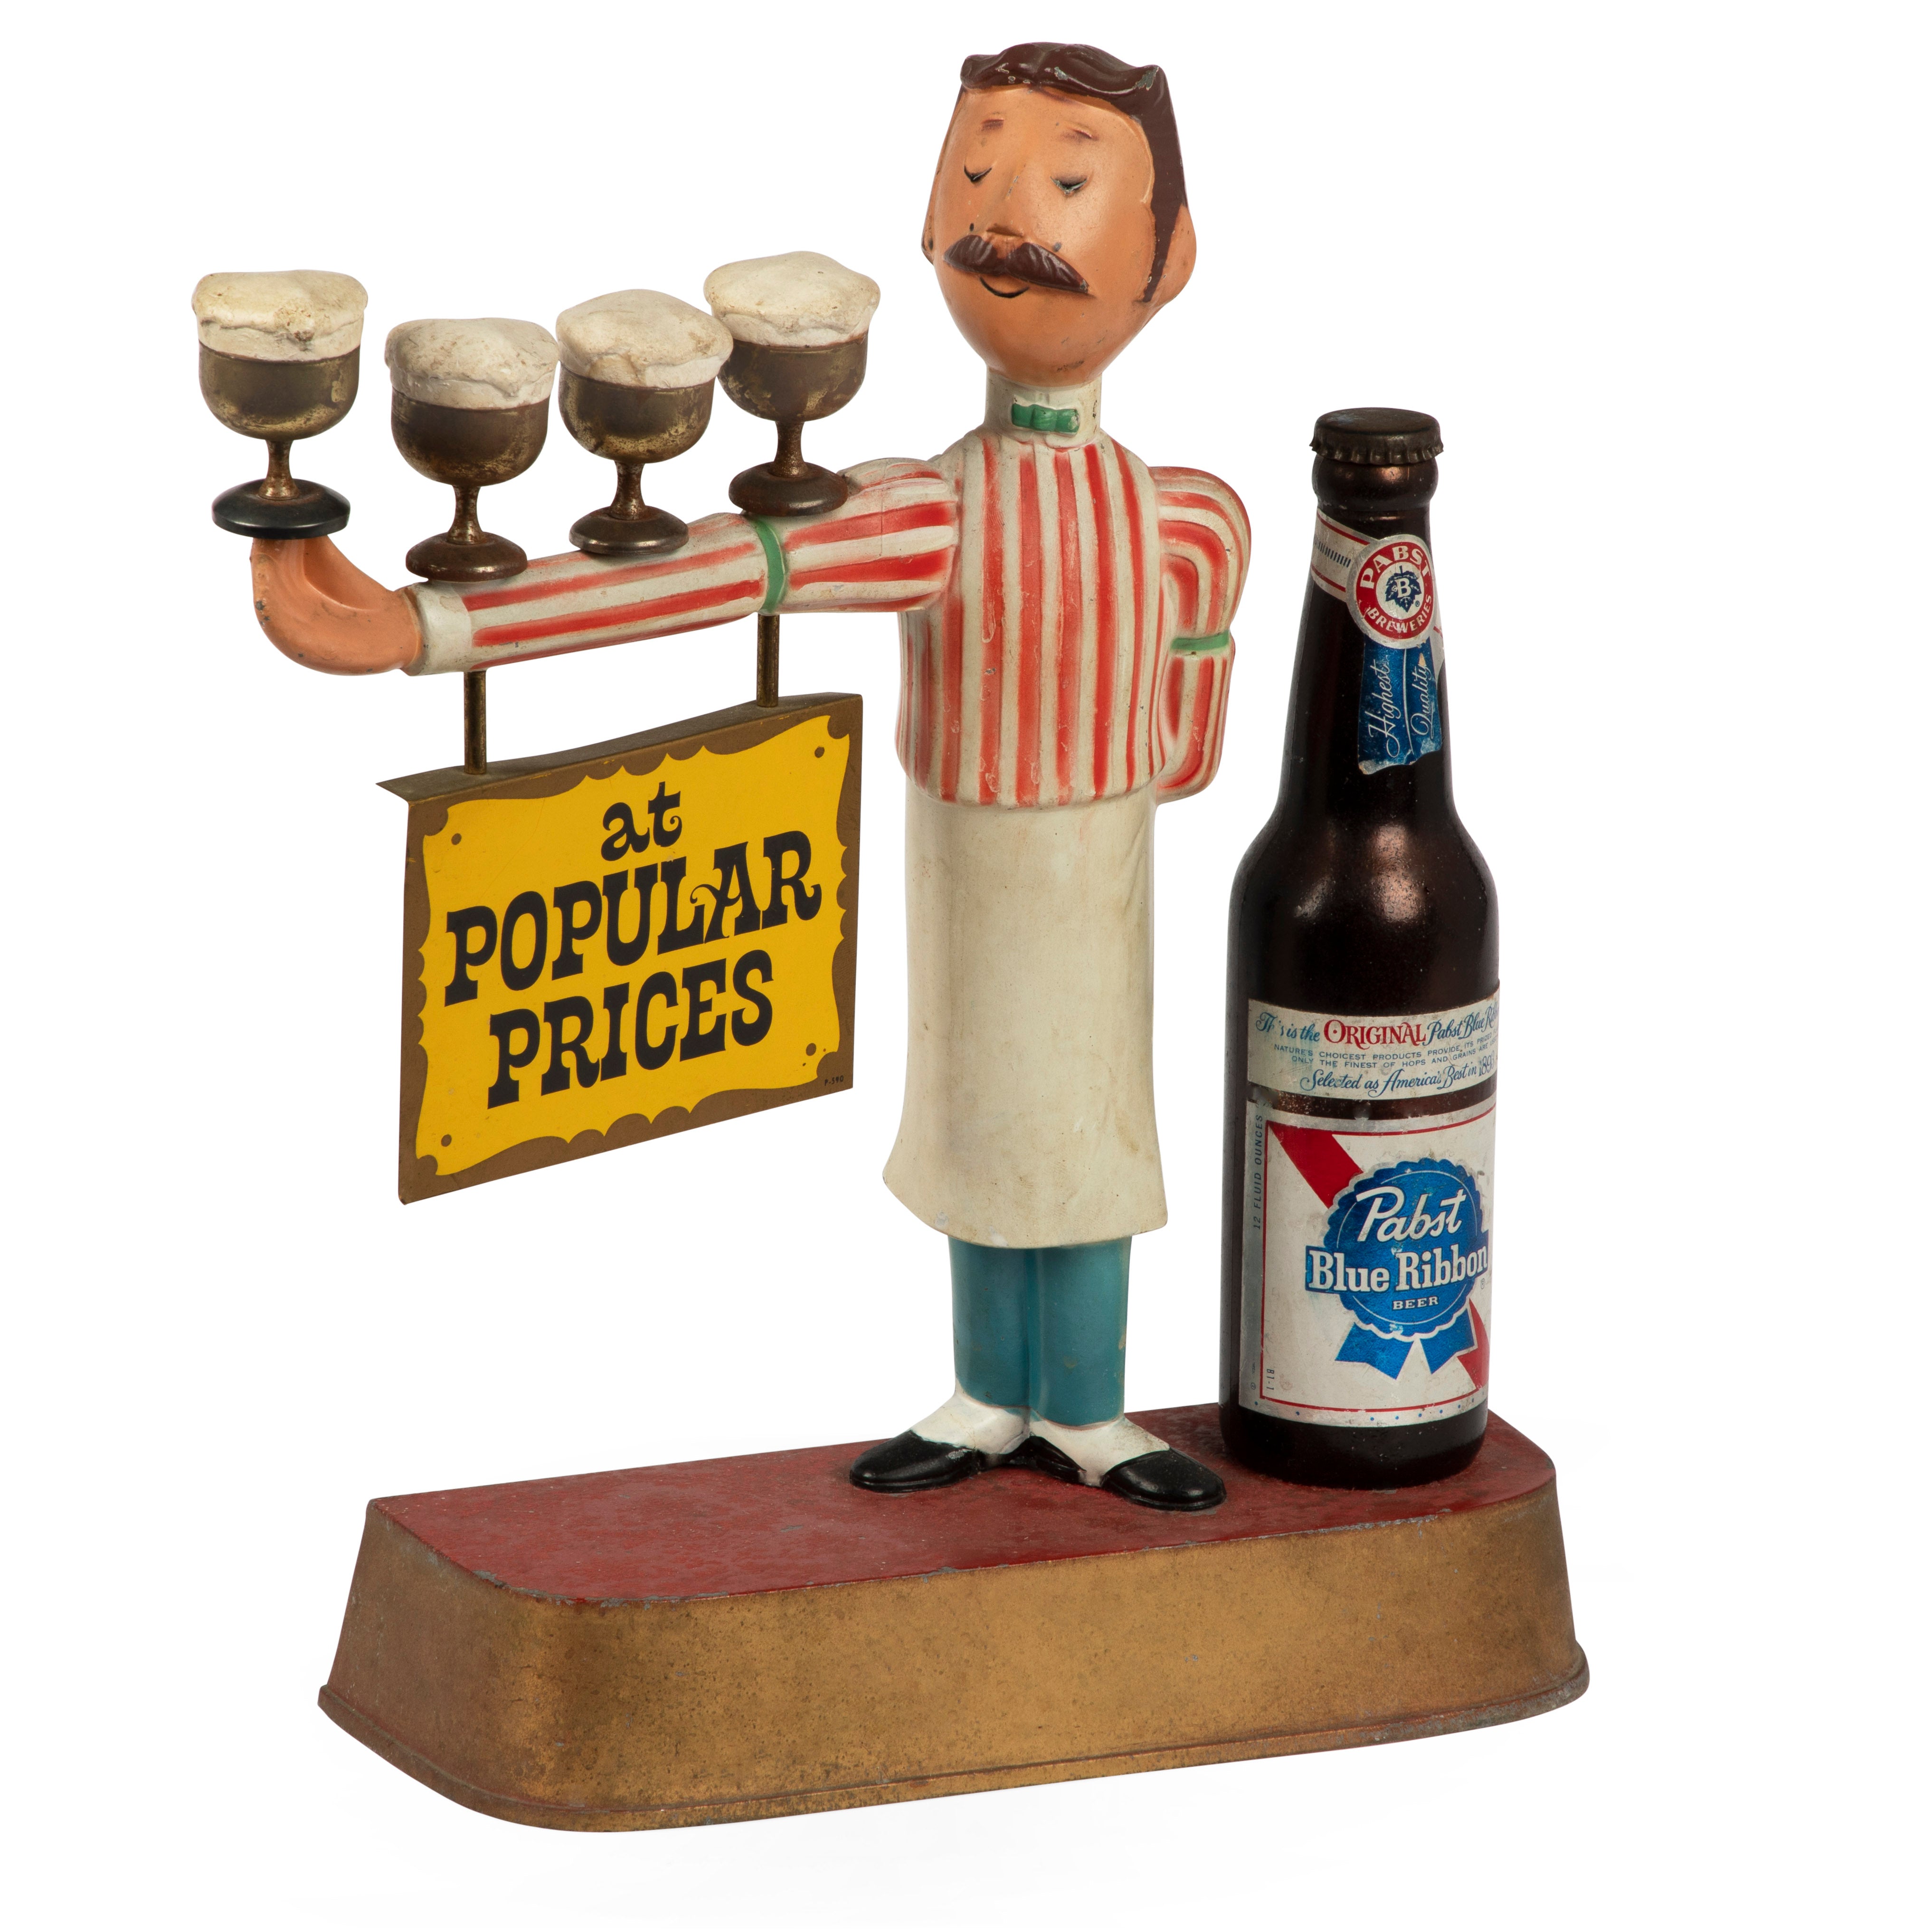 Pabst Blue Ribbon Beer Advertising Figure